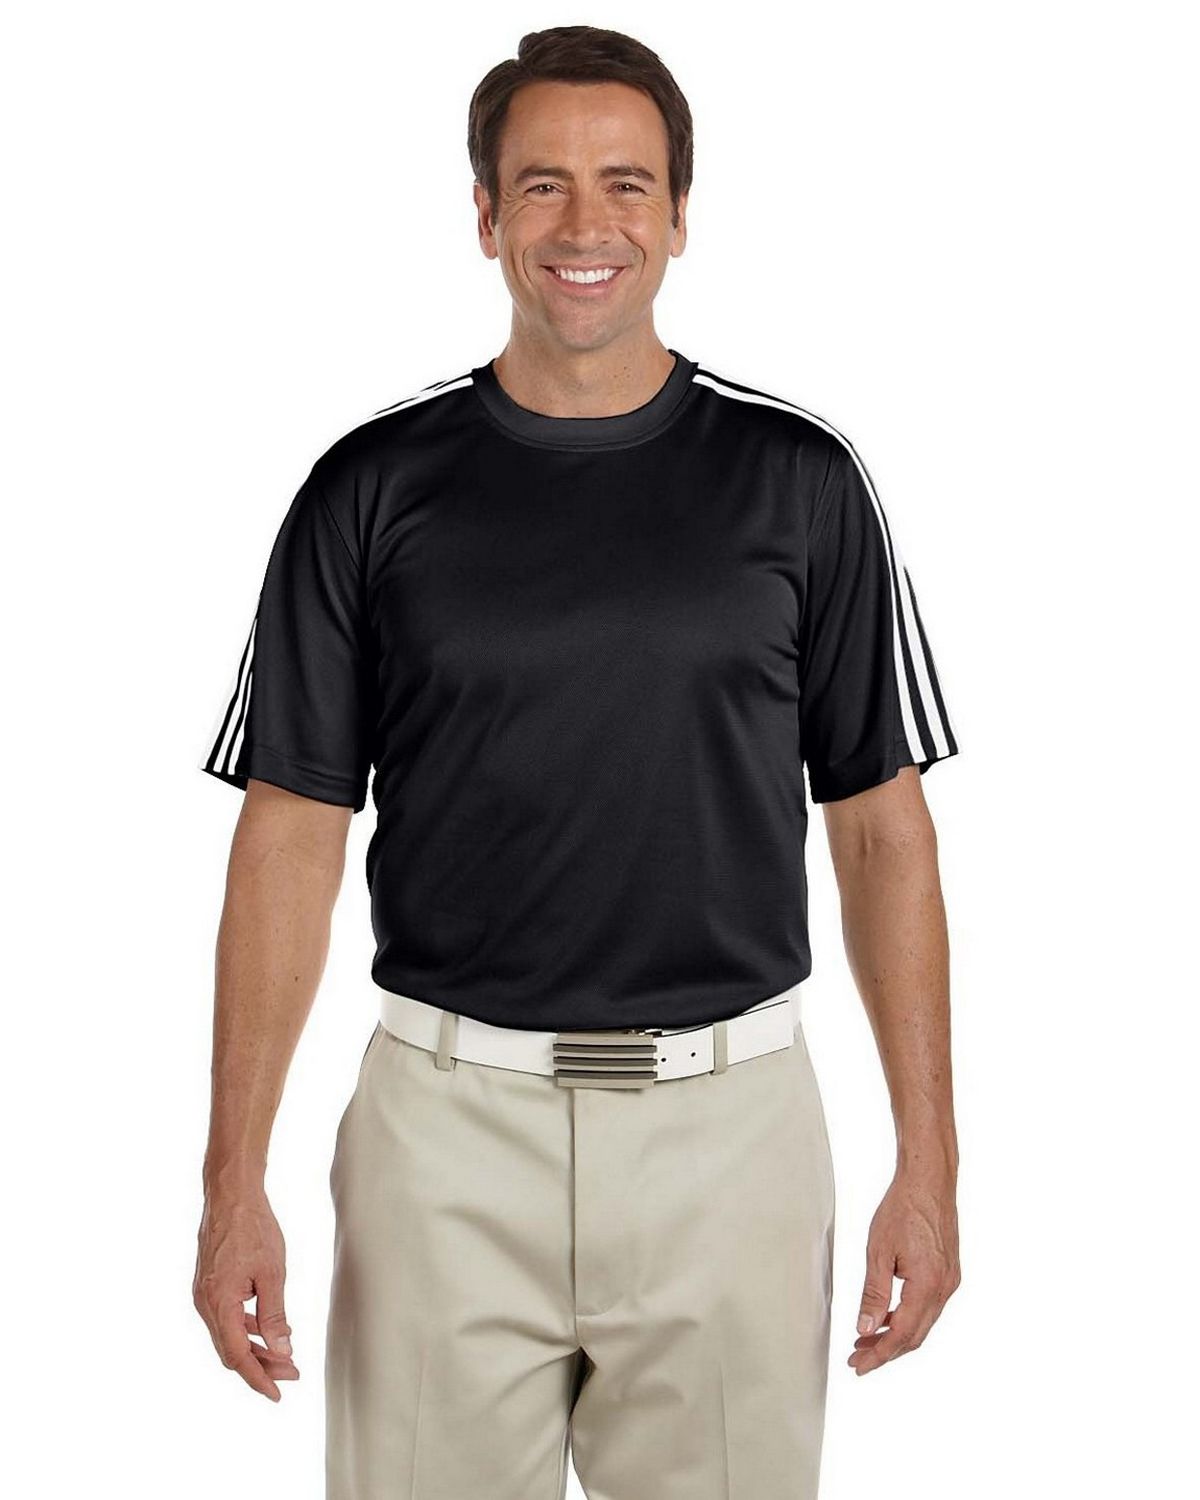 Adidas Golf A72 Men’s ClimaLite 3-Stripes T-Shirt